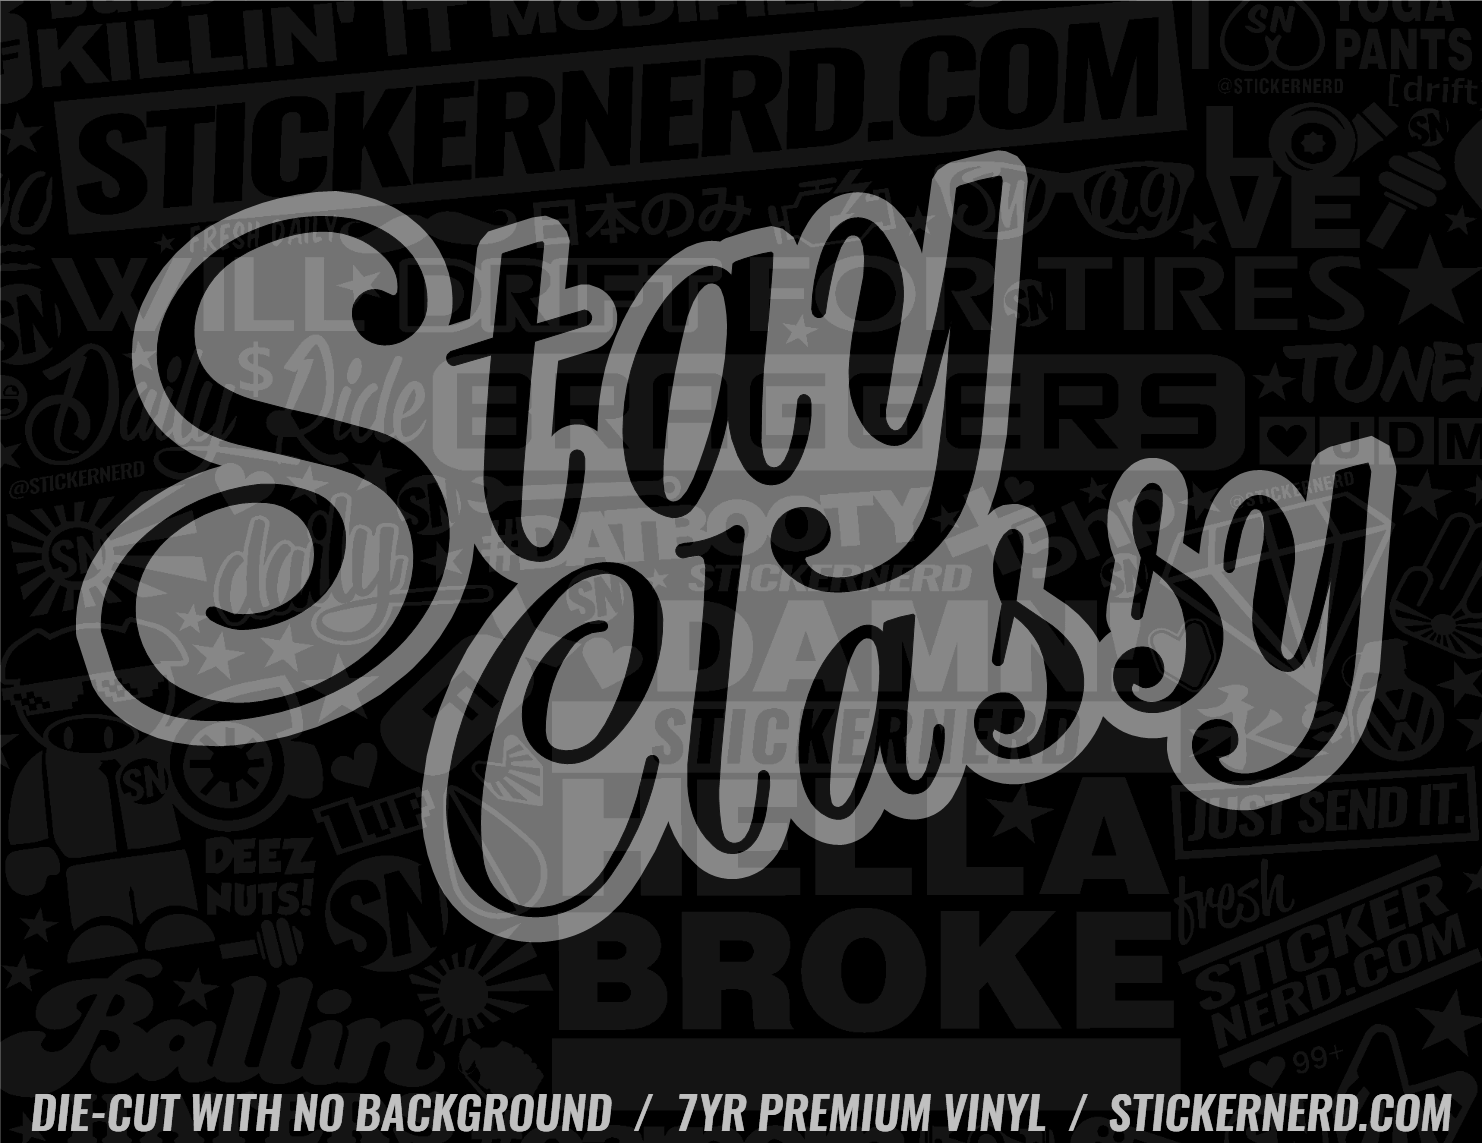 Stay Classy Sticker - Decal - STICKERNERD.COM